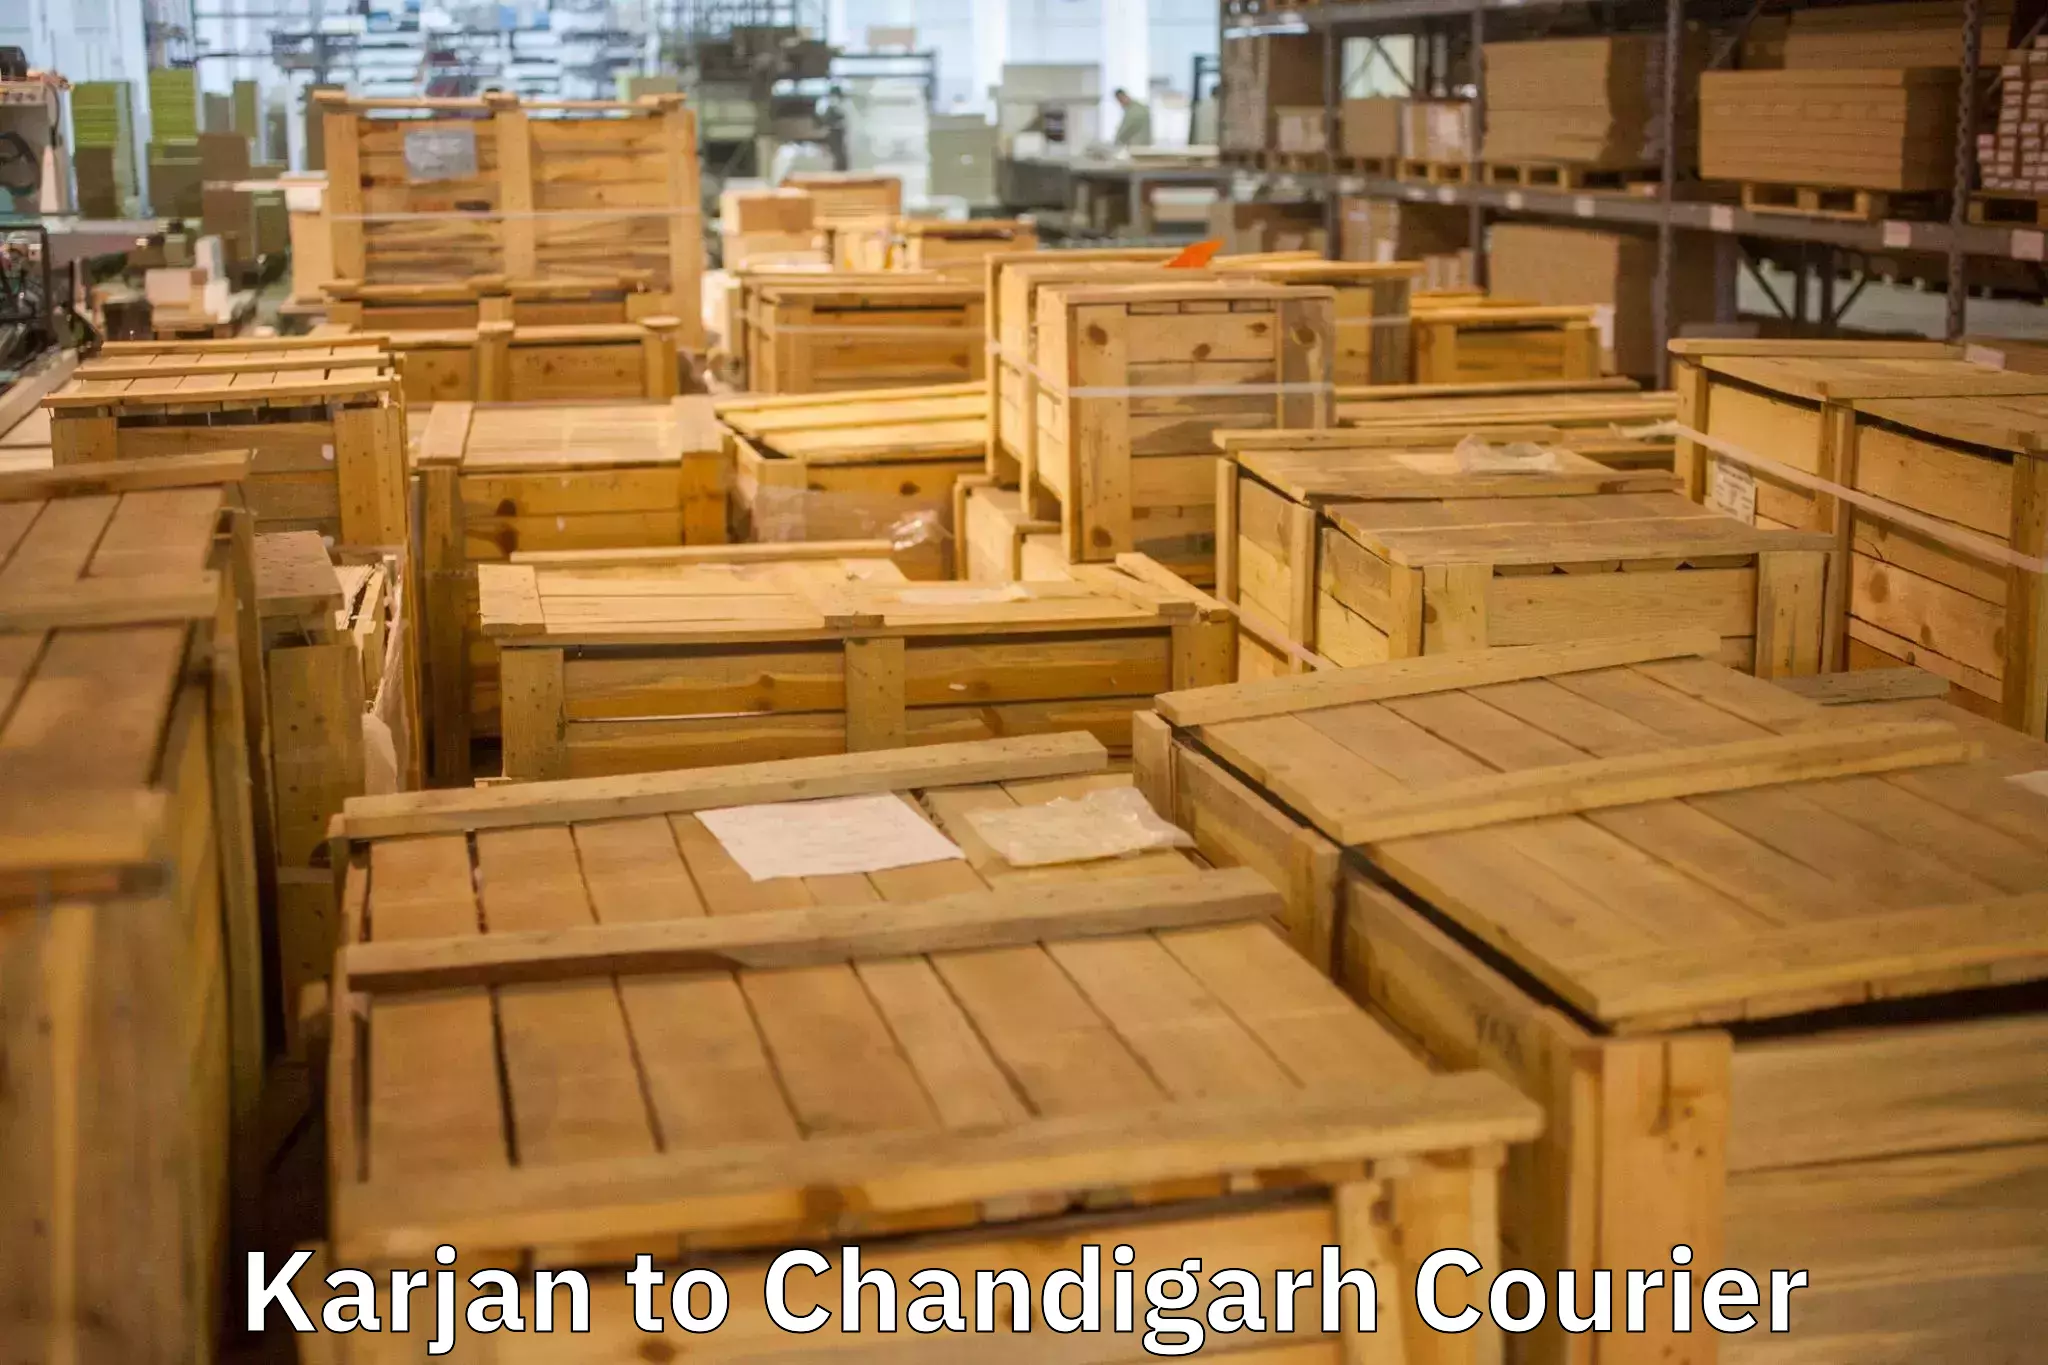 Stress-free household moving Karjan to Chandigarh